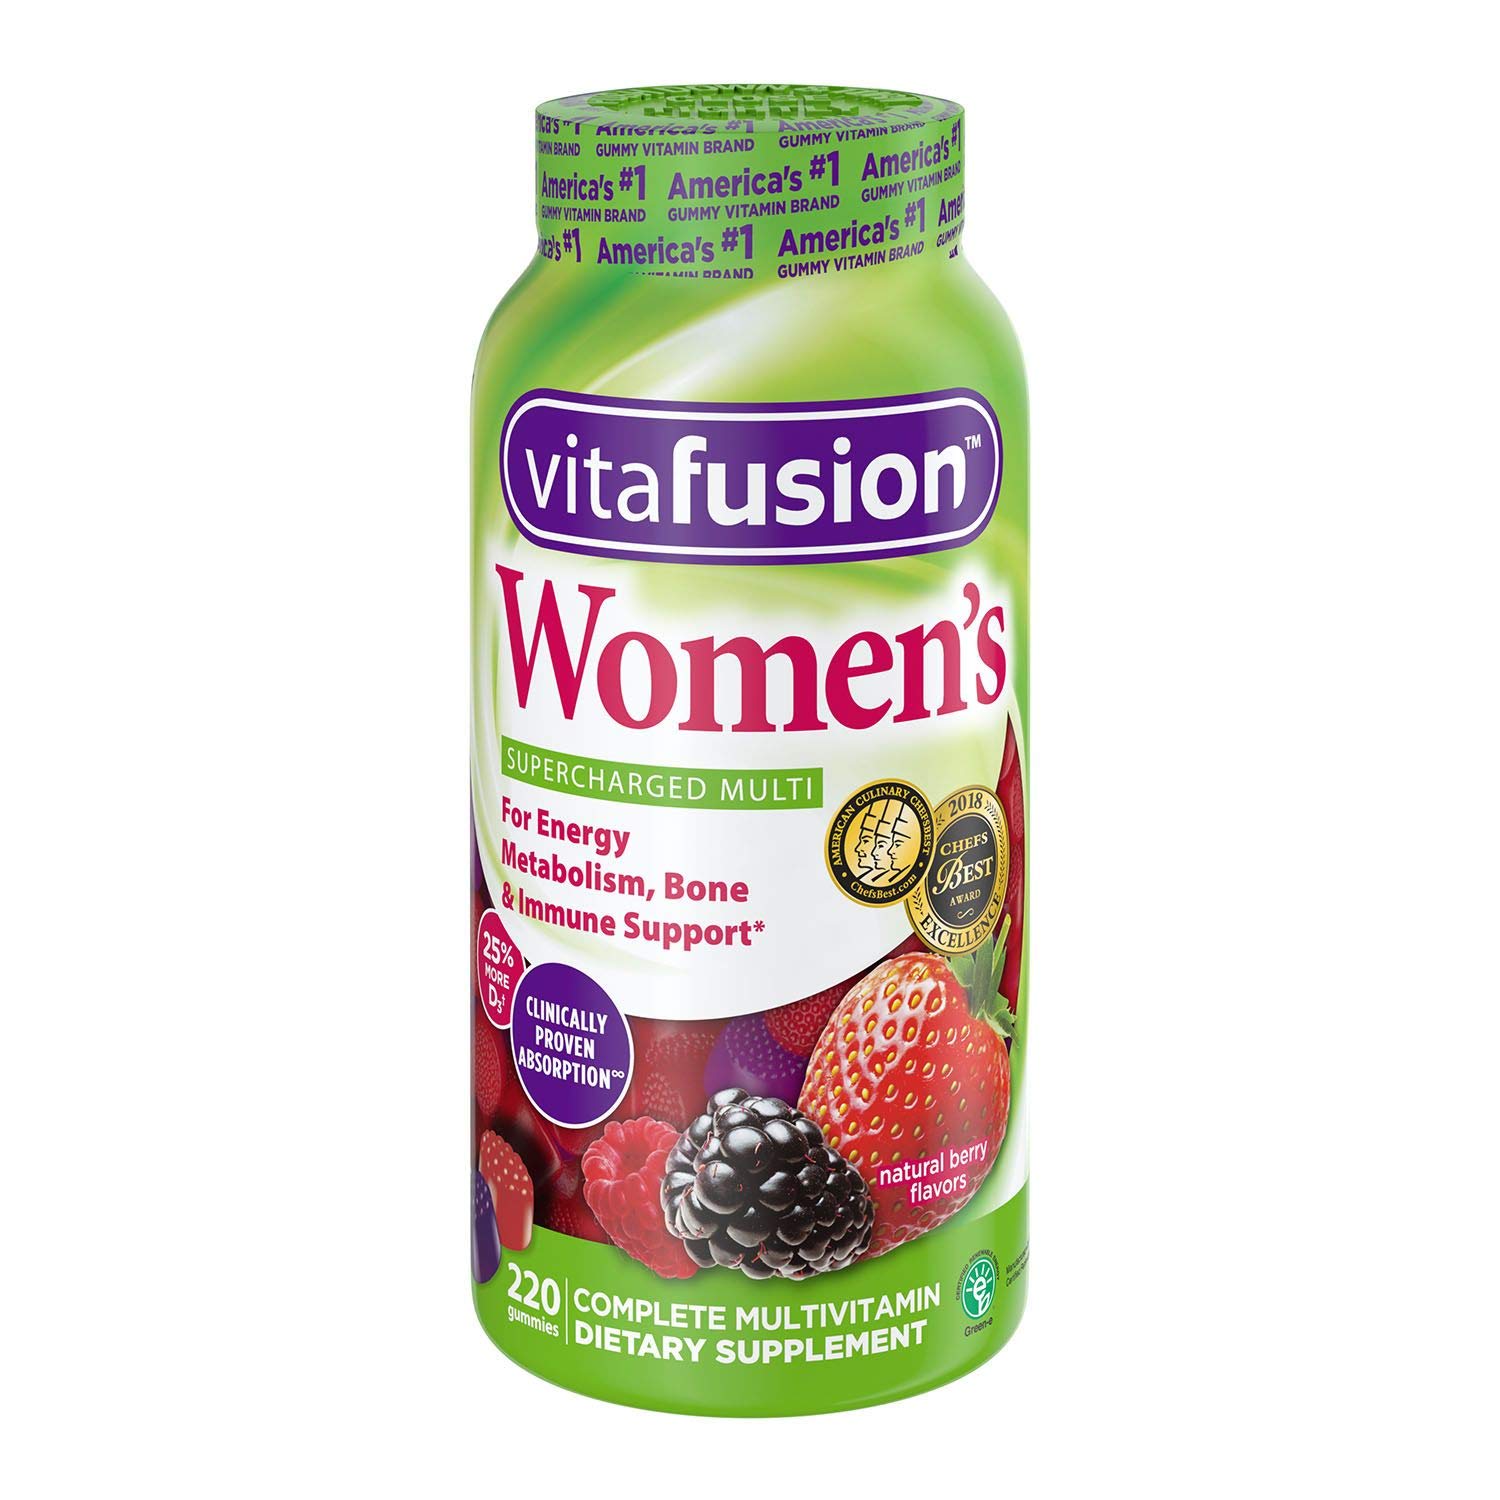 Vitafusion Vitamin Tổng Hợp Cho Nữ, 220 Viên Image